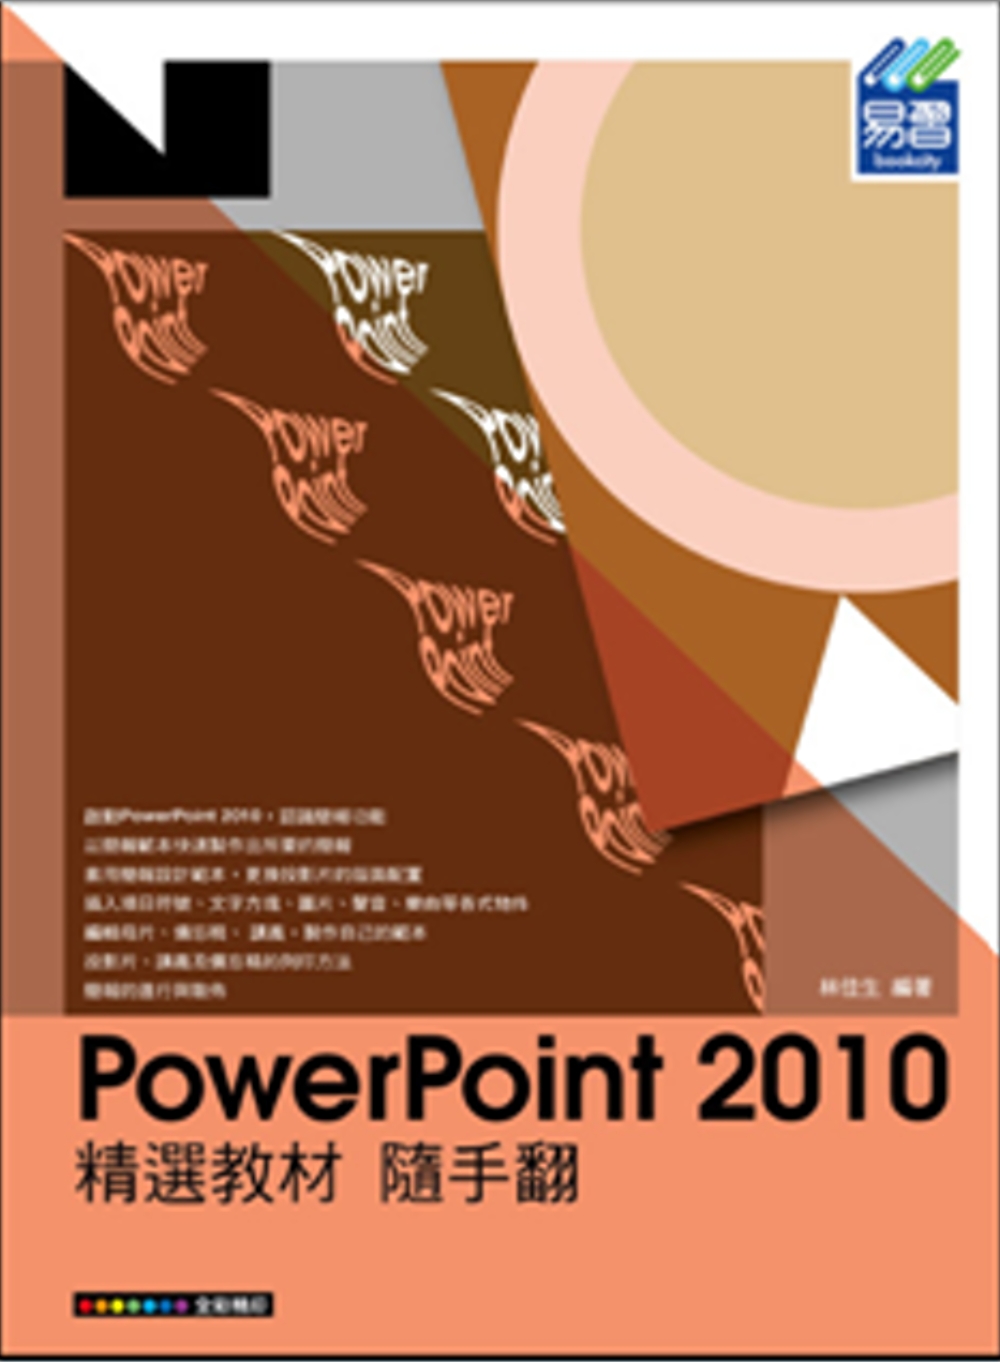 PowerPoint 2010 精選教材 隨手翻(附綠色範例...